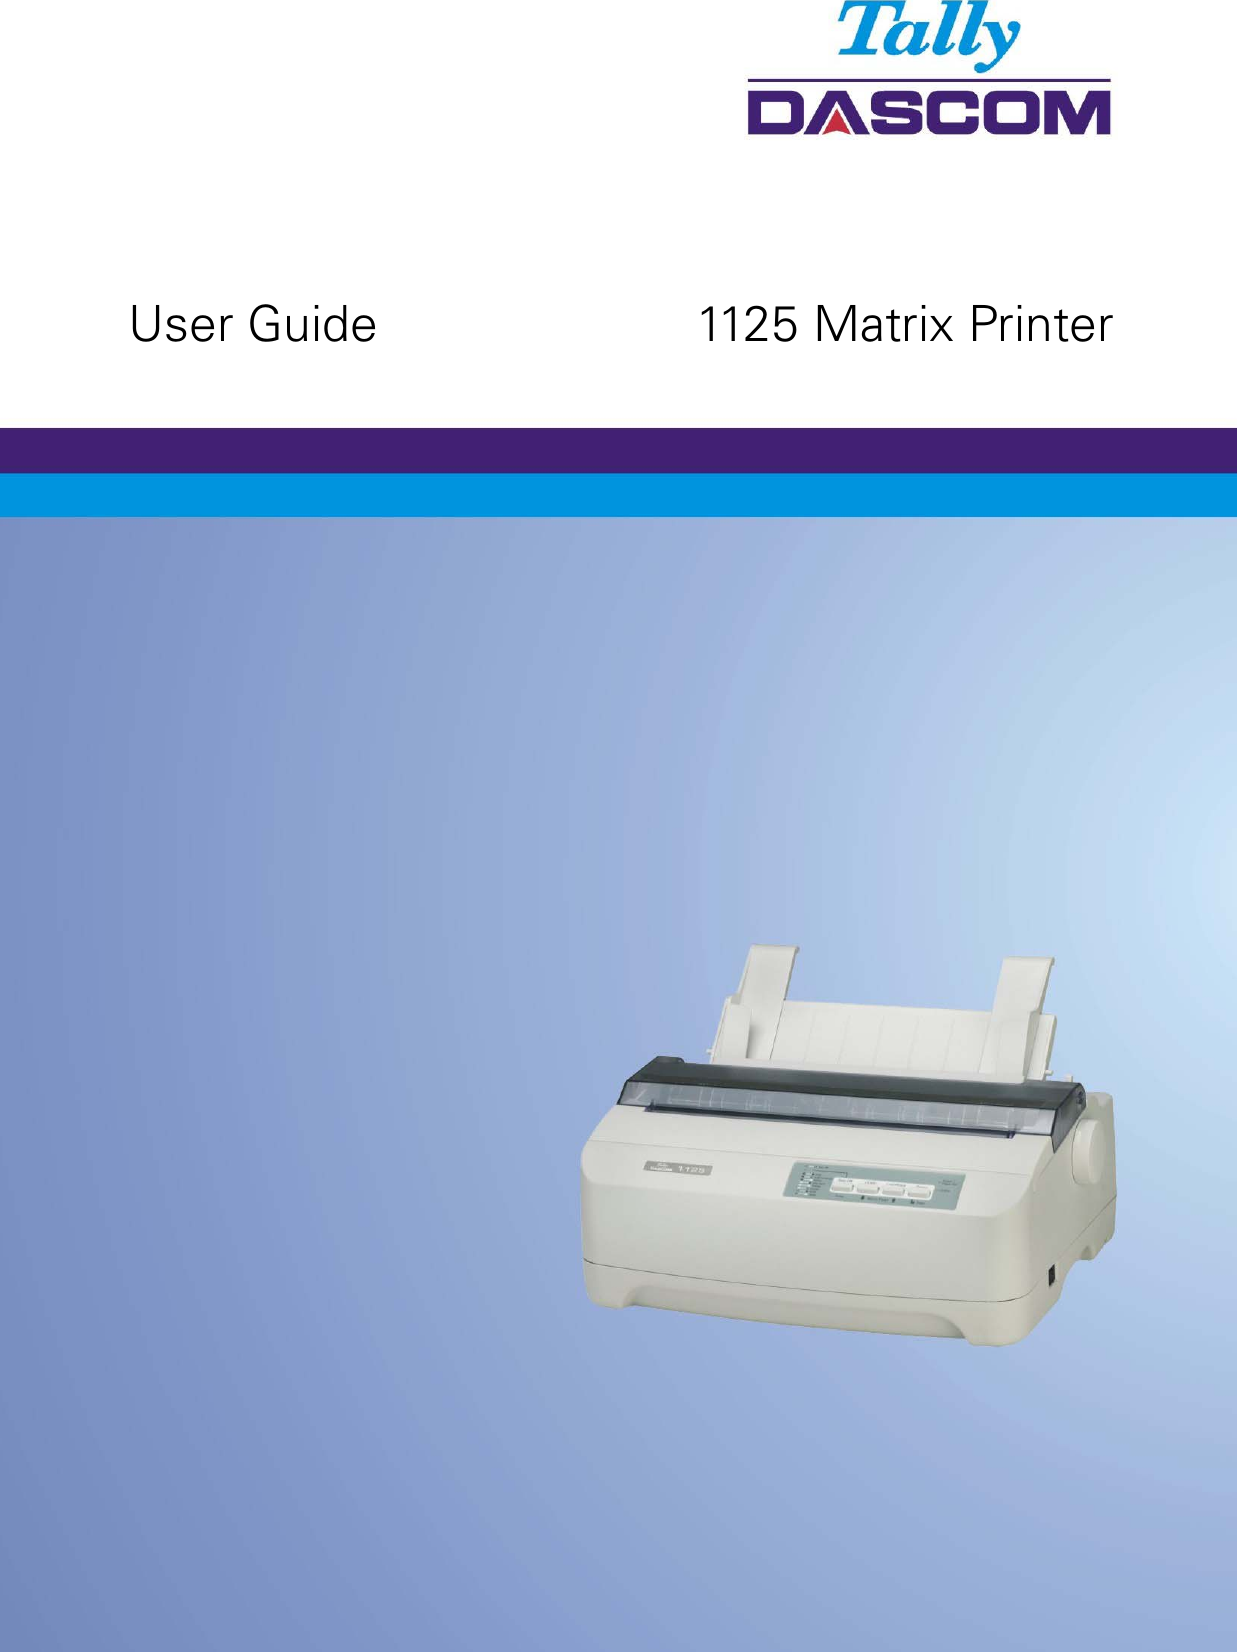      User Guide        1125 Matrix Printer 